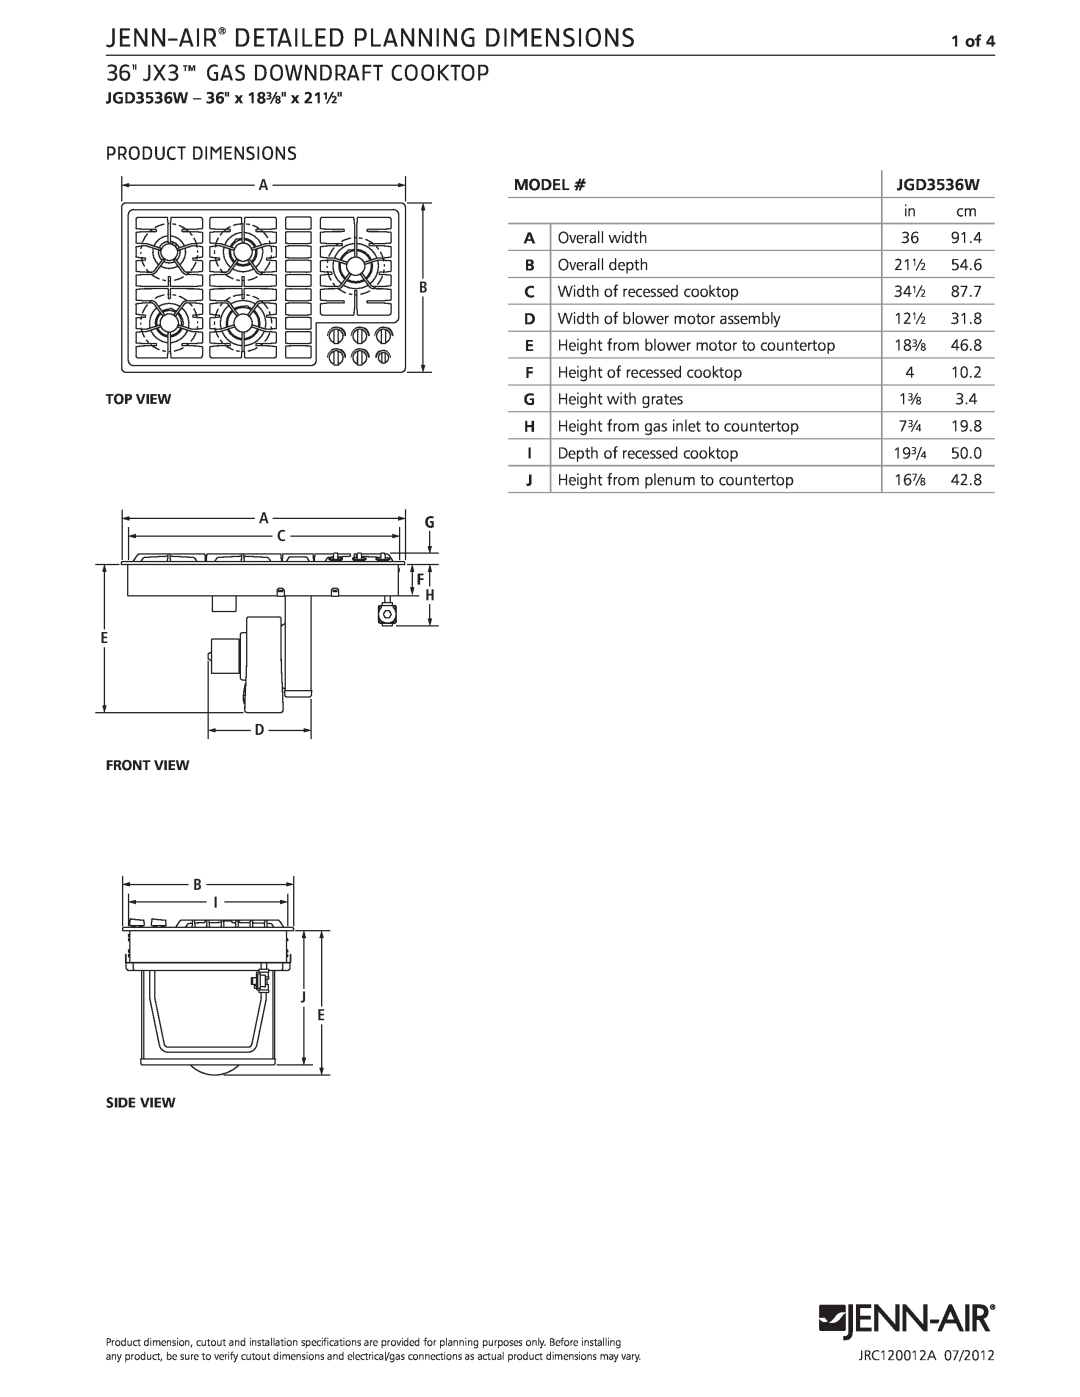 Jenn-Air JRC120012A dimensions Jenn-Air Detailed Planning Dimensions, 36 jx3 Gas Downdraft Cooktop, Product Dimensions 